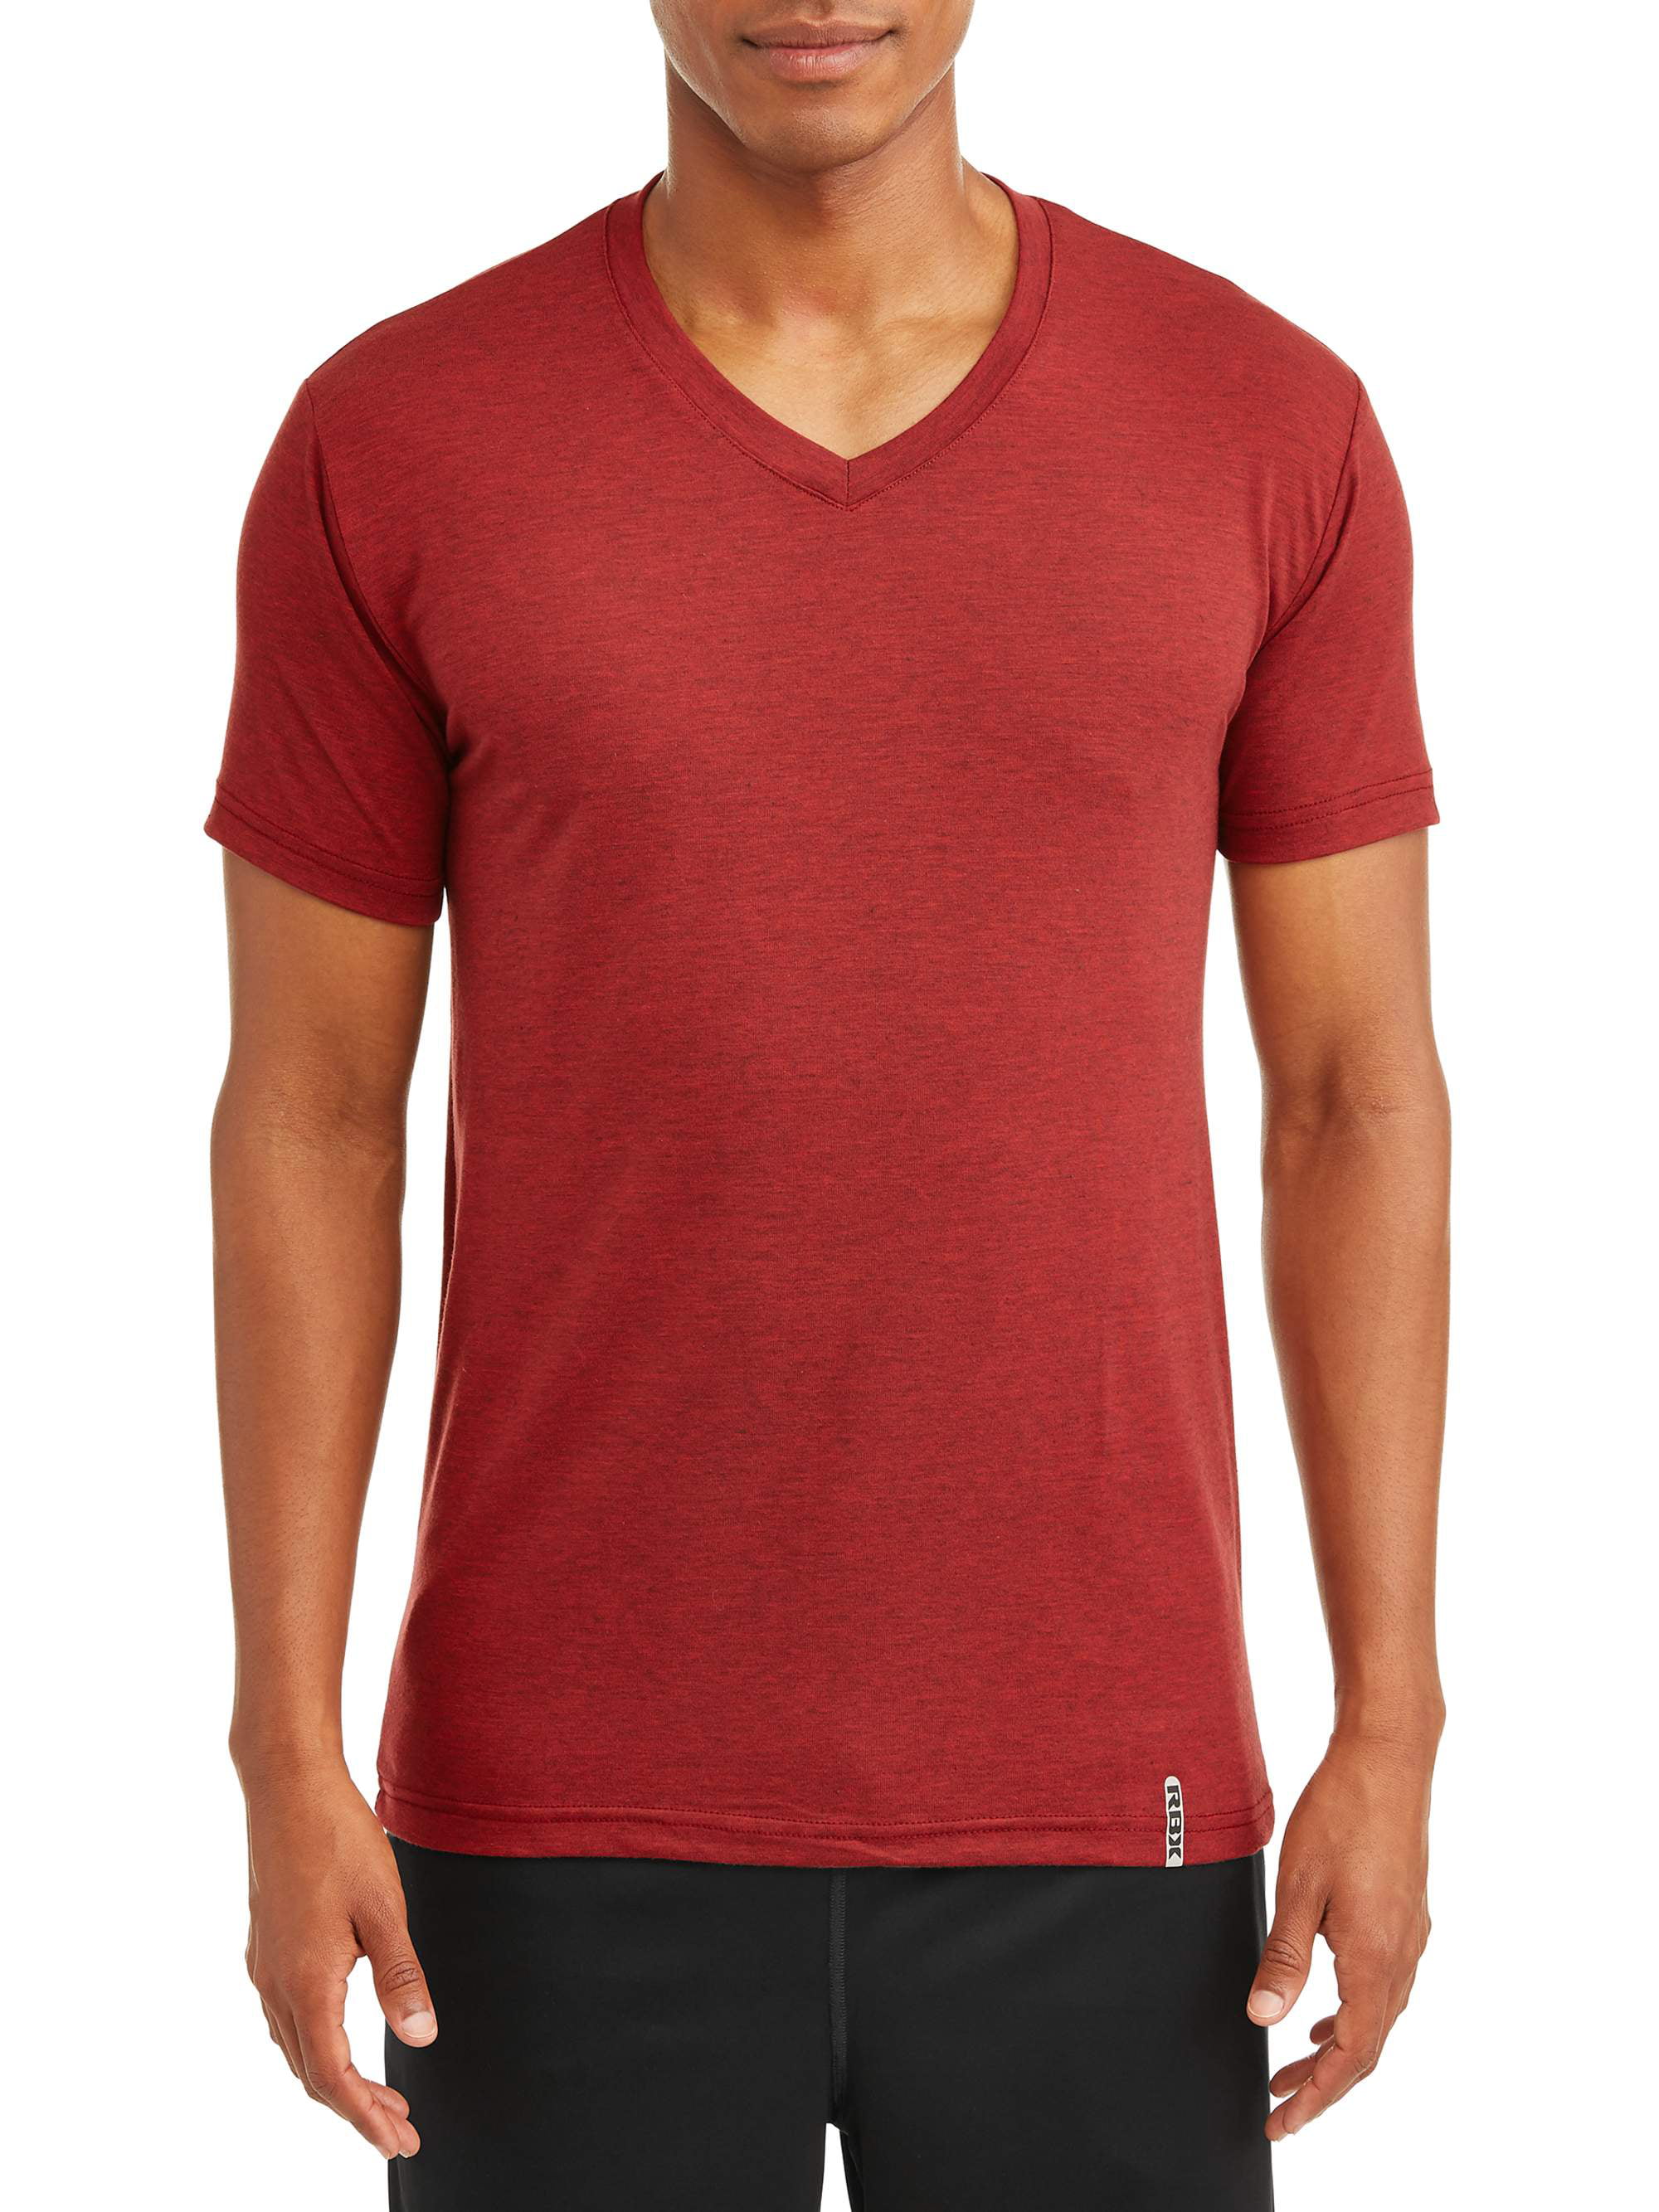 RBX Men's Ultra Soft Short-Sleeve V-Neck T-Shirt - Walmart.com